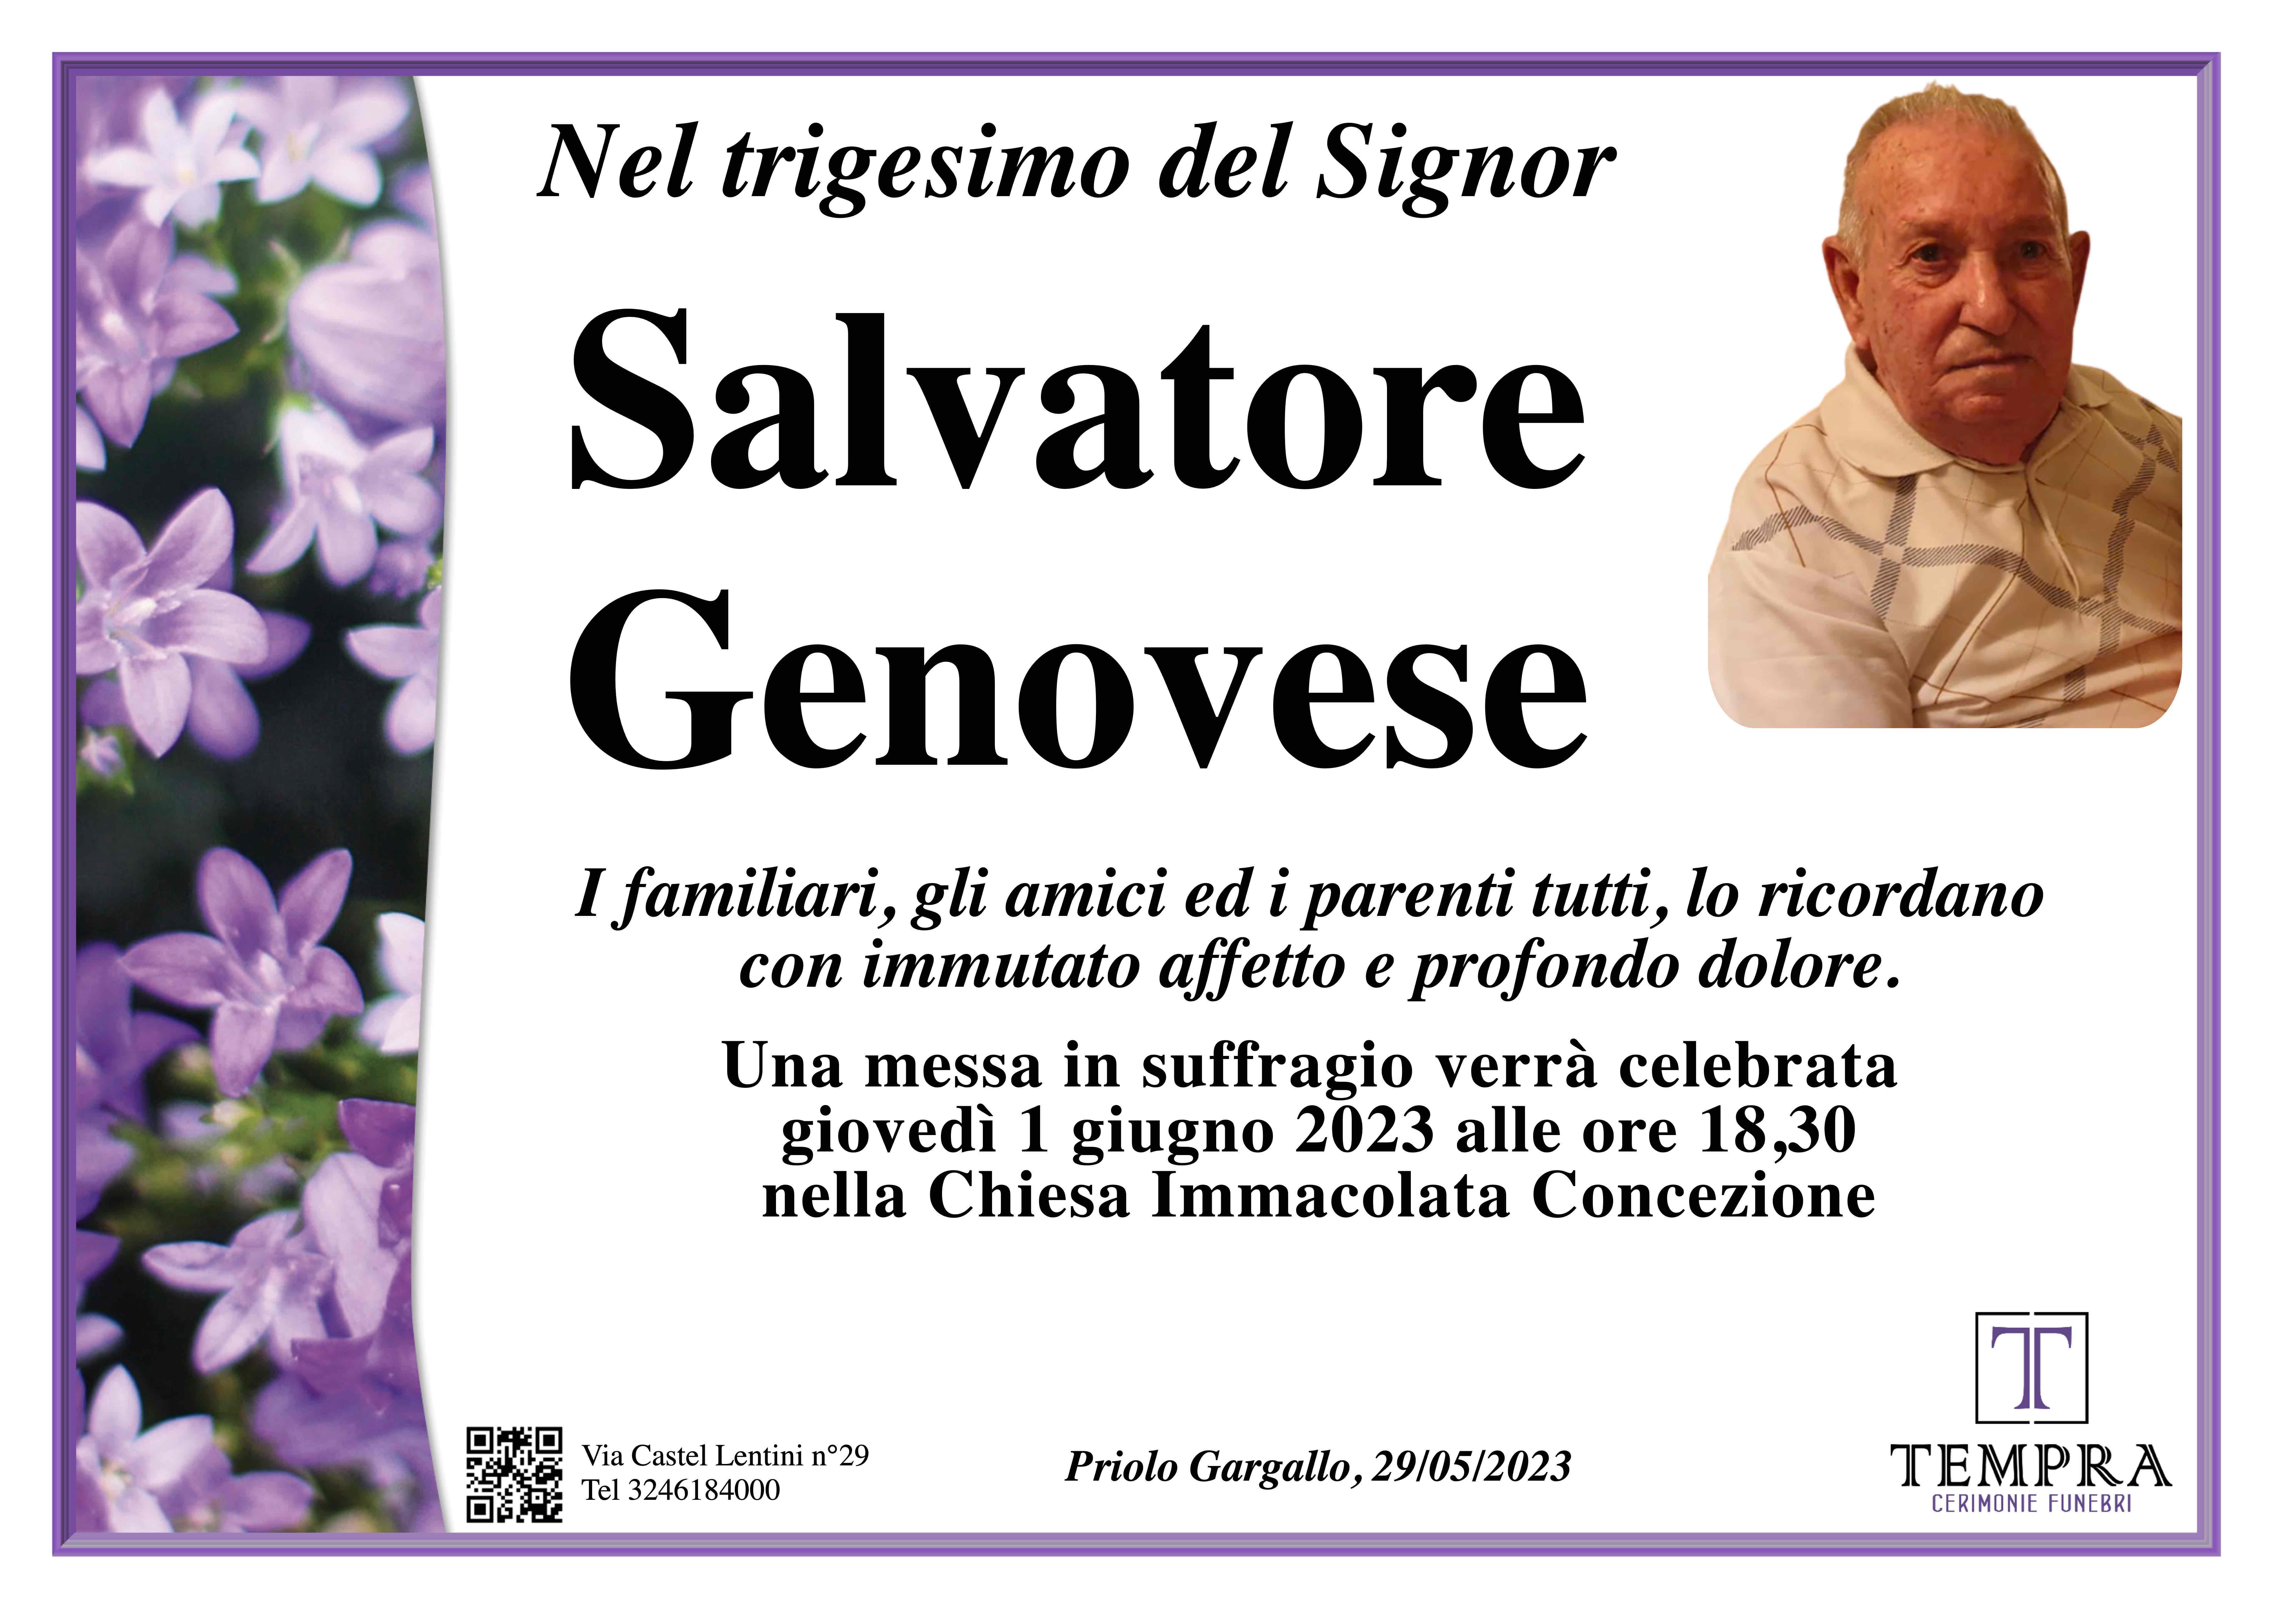 Salvatore Genovese